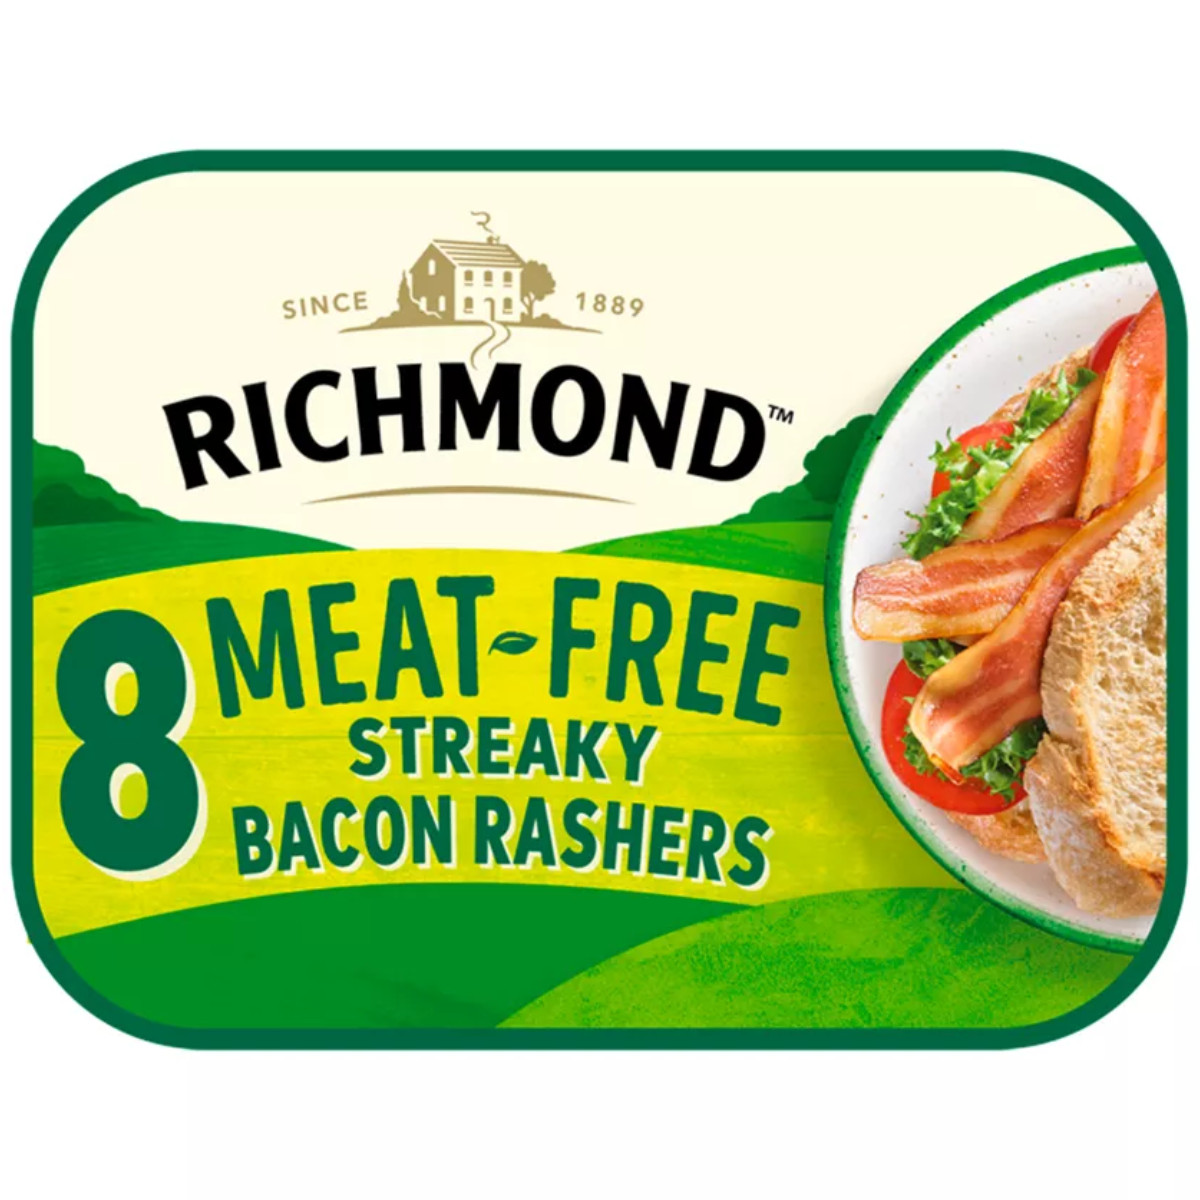 Richmond Meat-Free Bacon Rashers